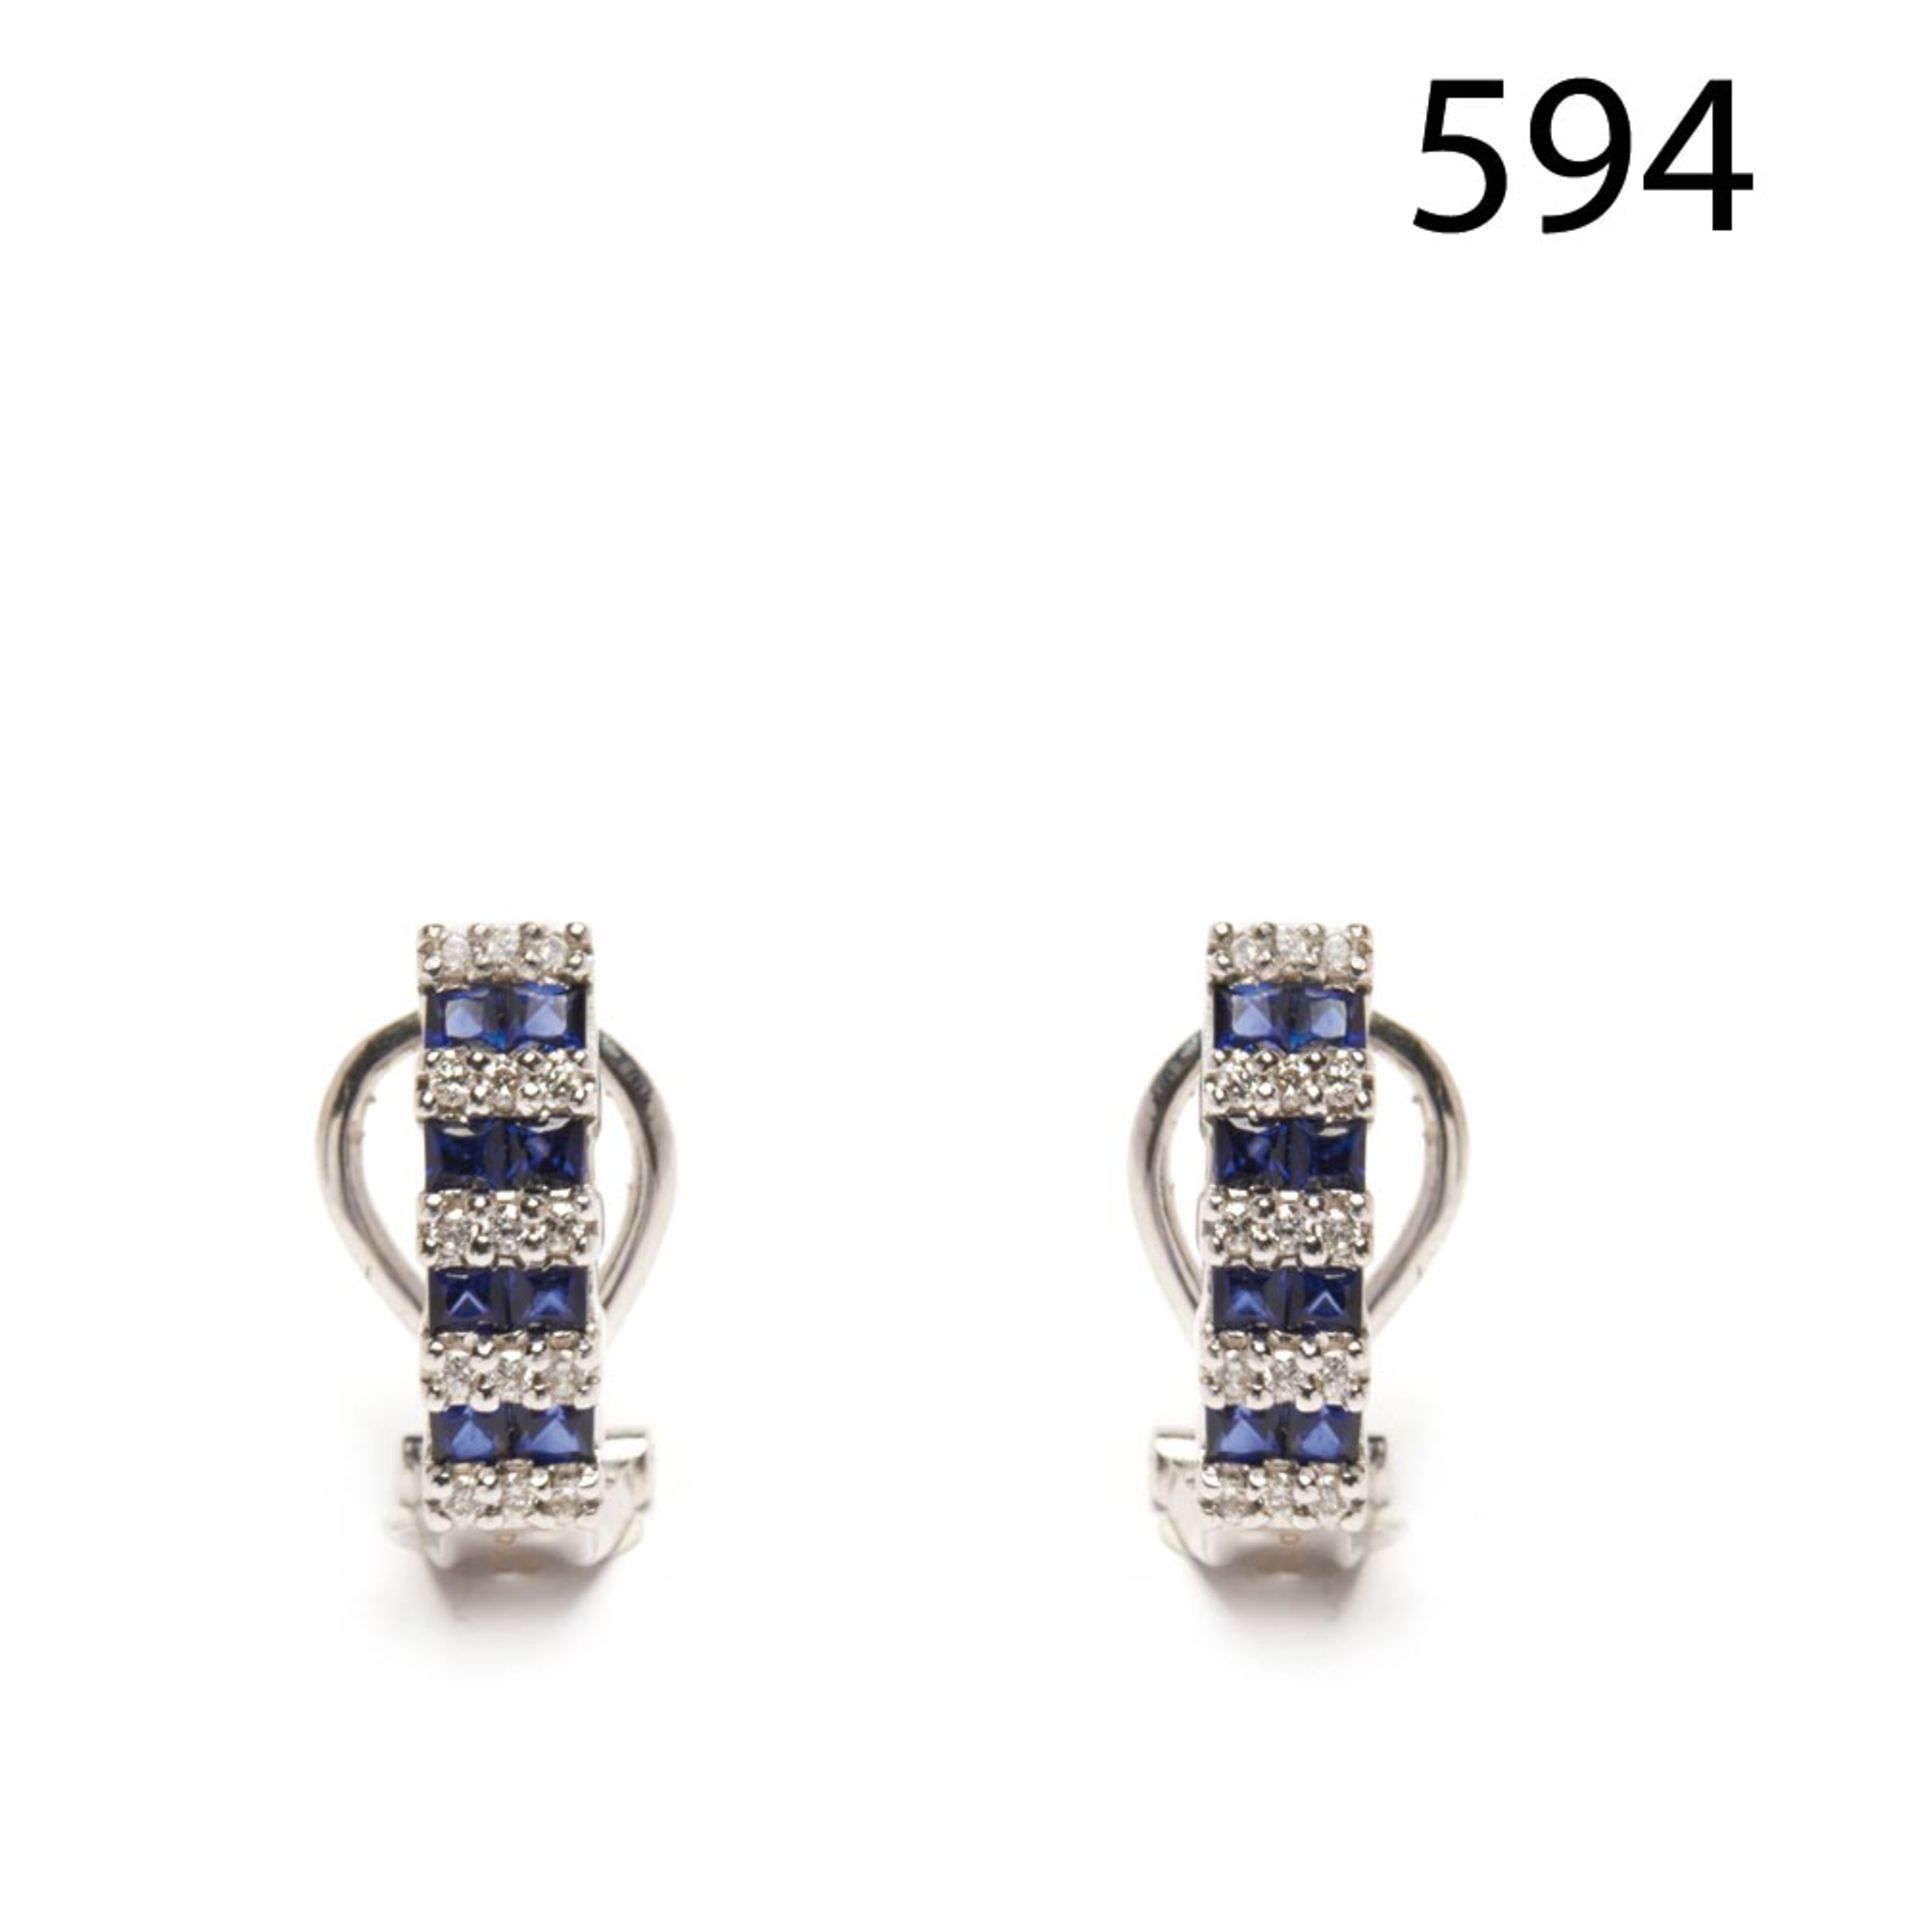 White gold, diamonds and blue sapphires earrings Pendientes media criolla en oro blanco con